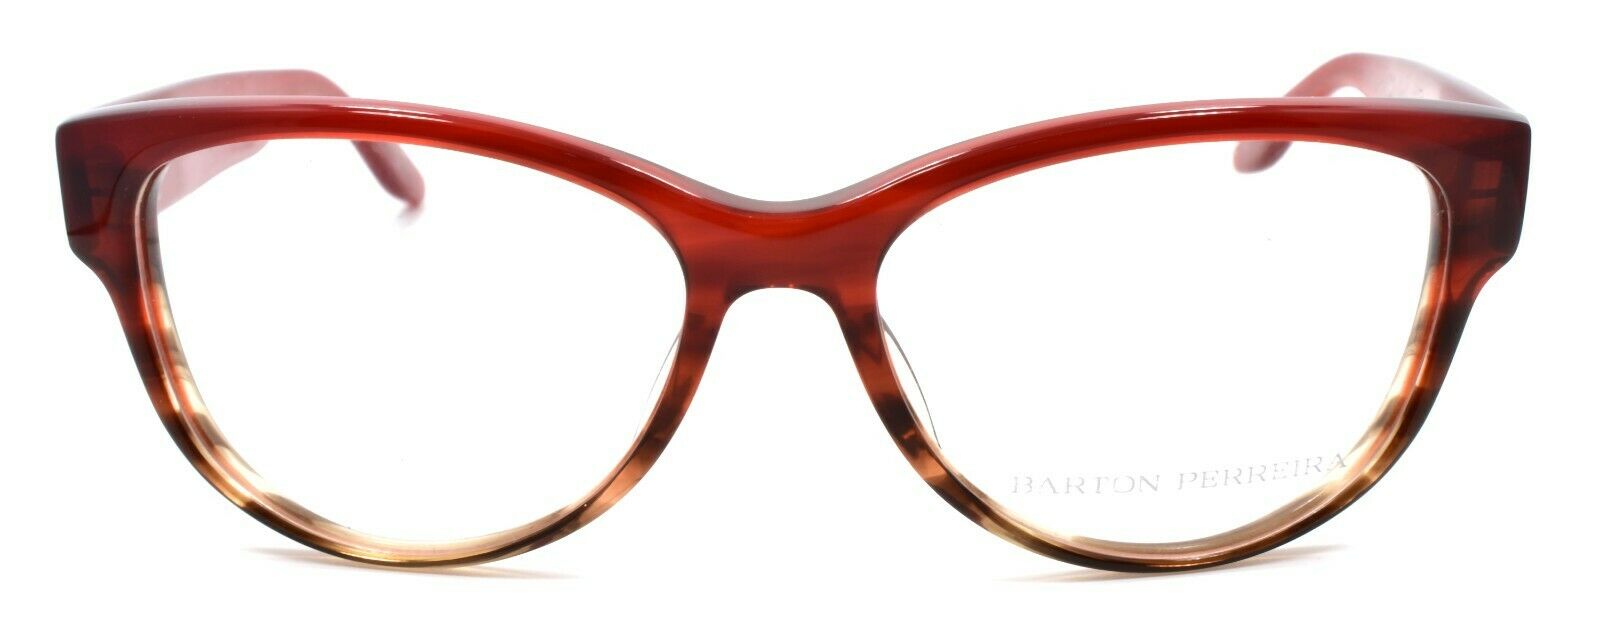 2-Barton Perreira Brooke GYR Women's Eyeglasses Frames 53-16-140 Gypsy Rose-672263037705-IKSpecs